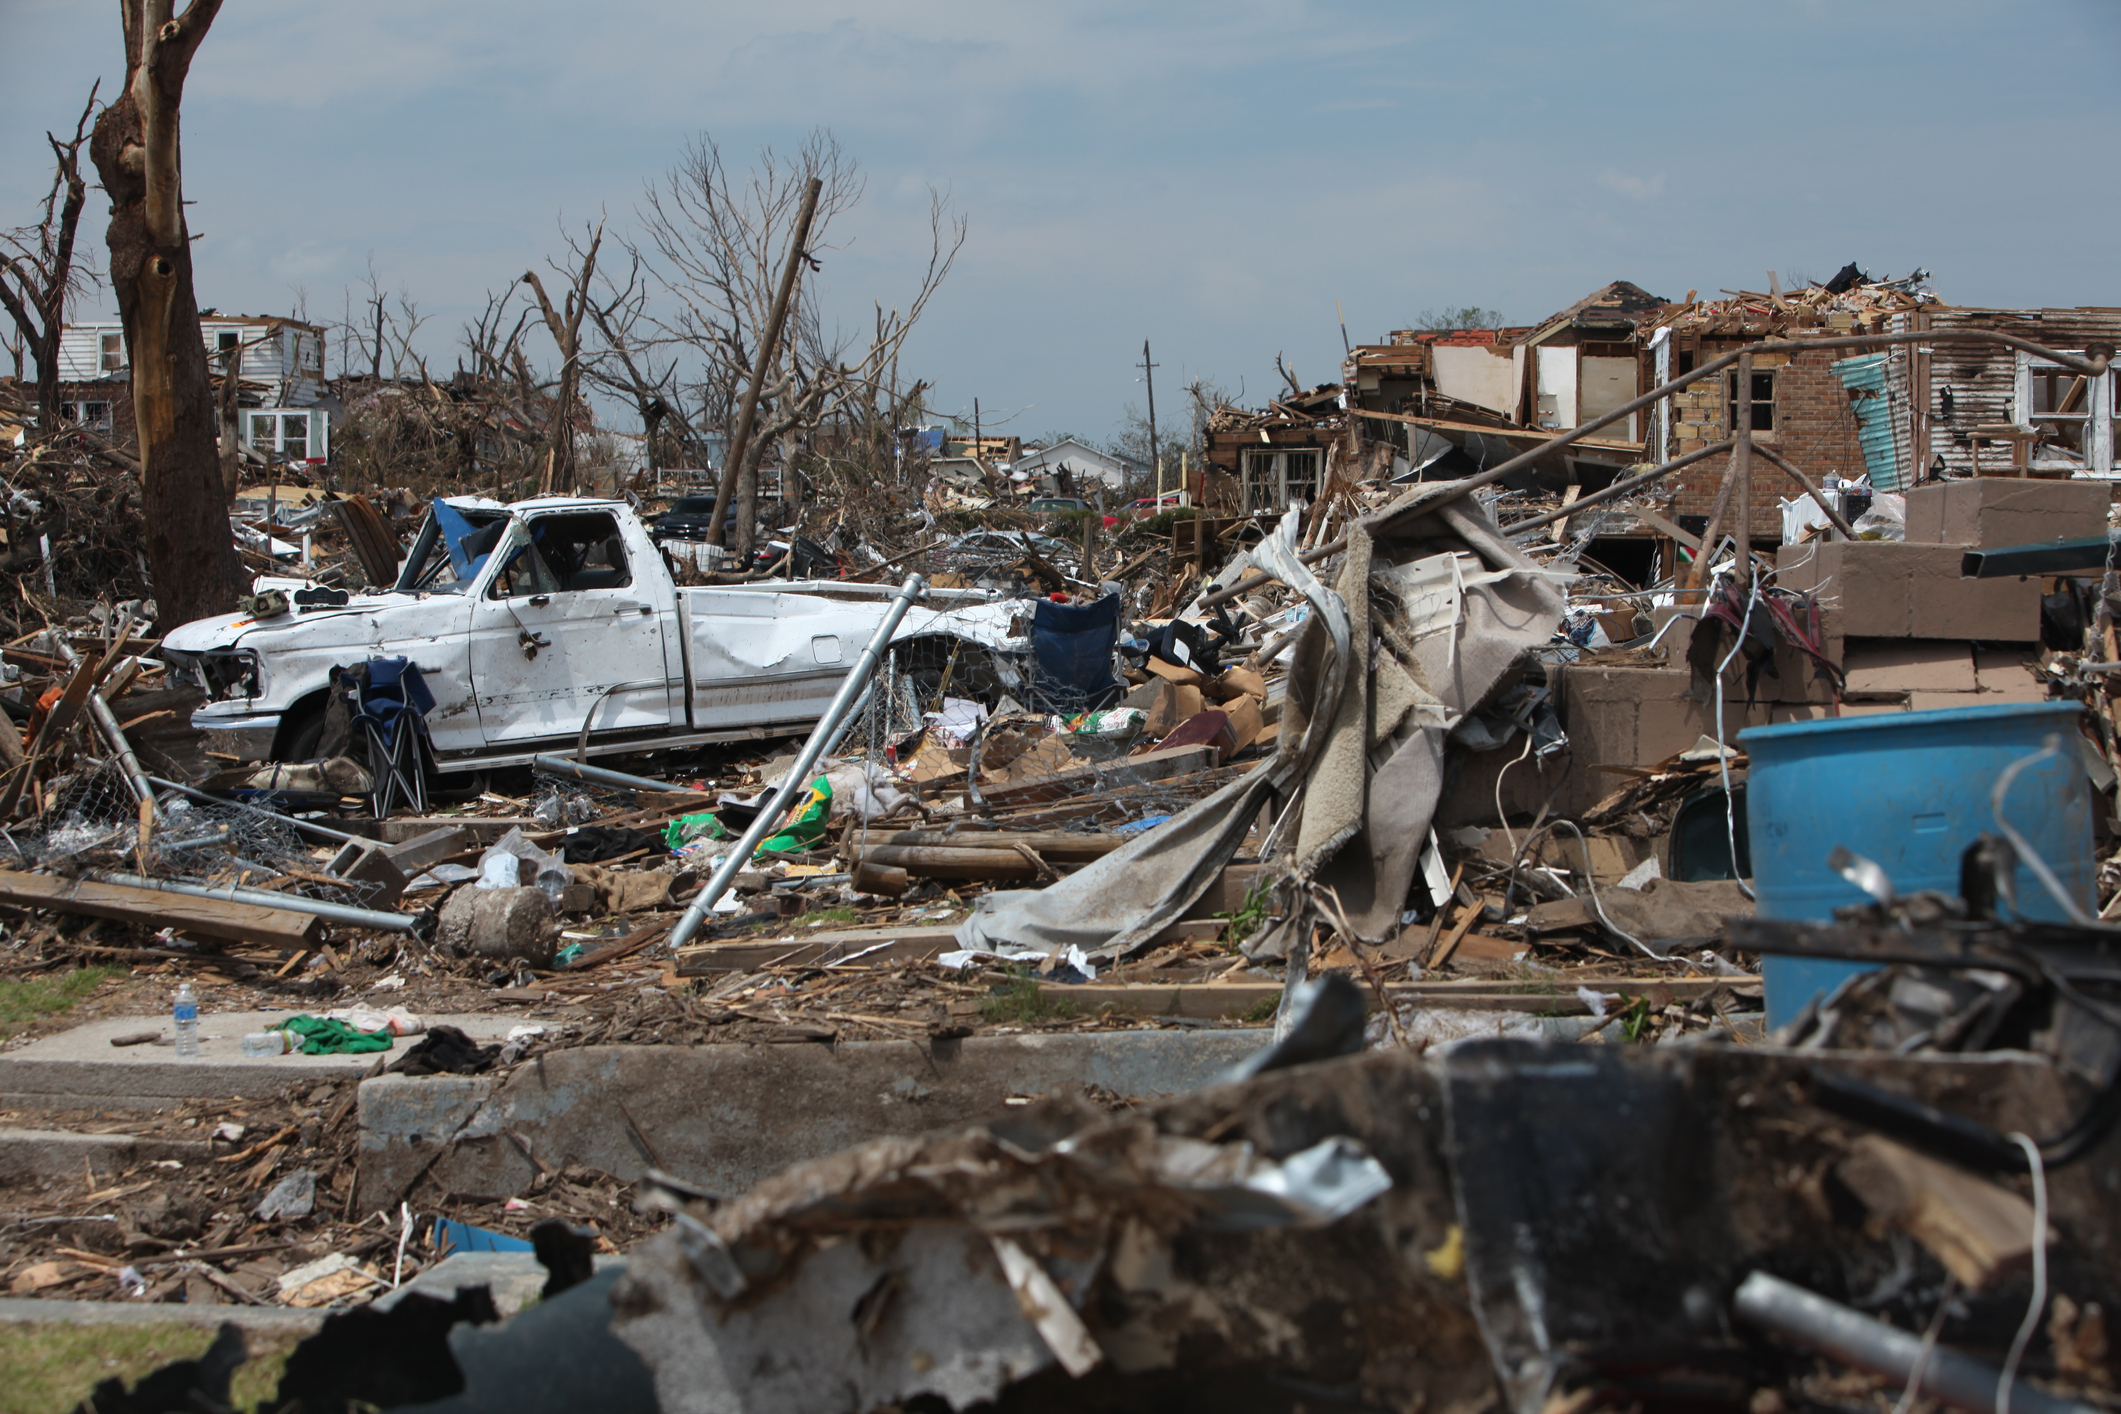 Tornado damage in a town in Missouri (Photo: iStock - picturejohn)